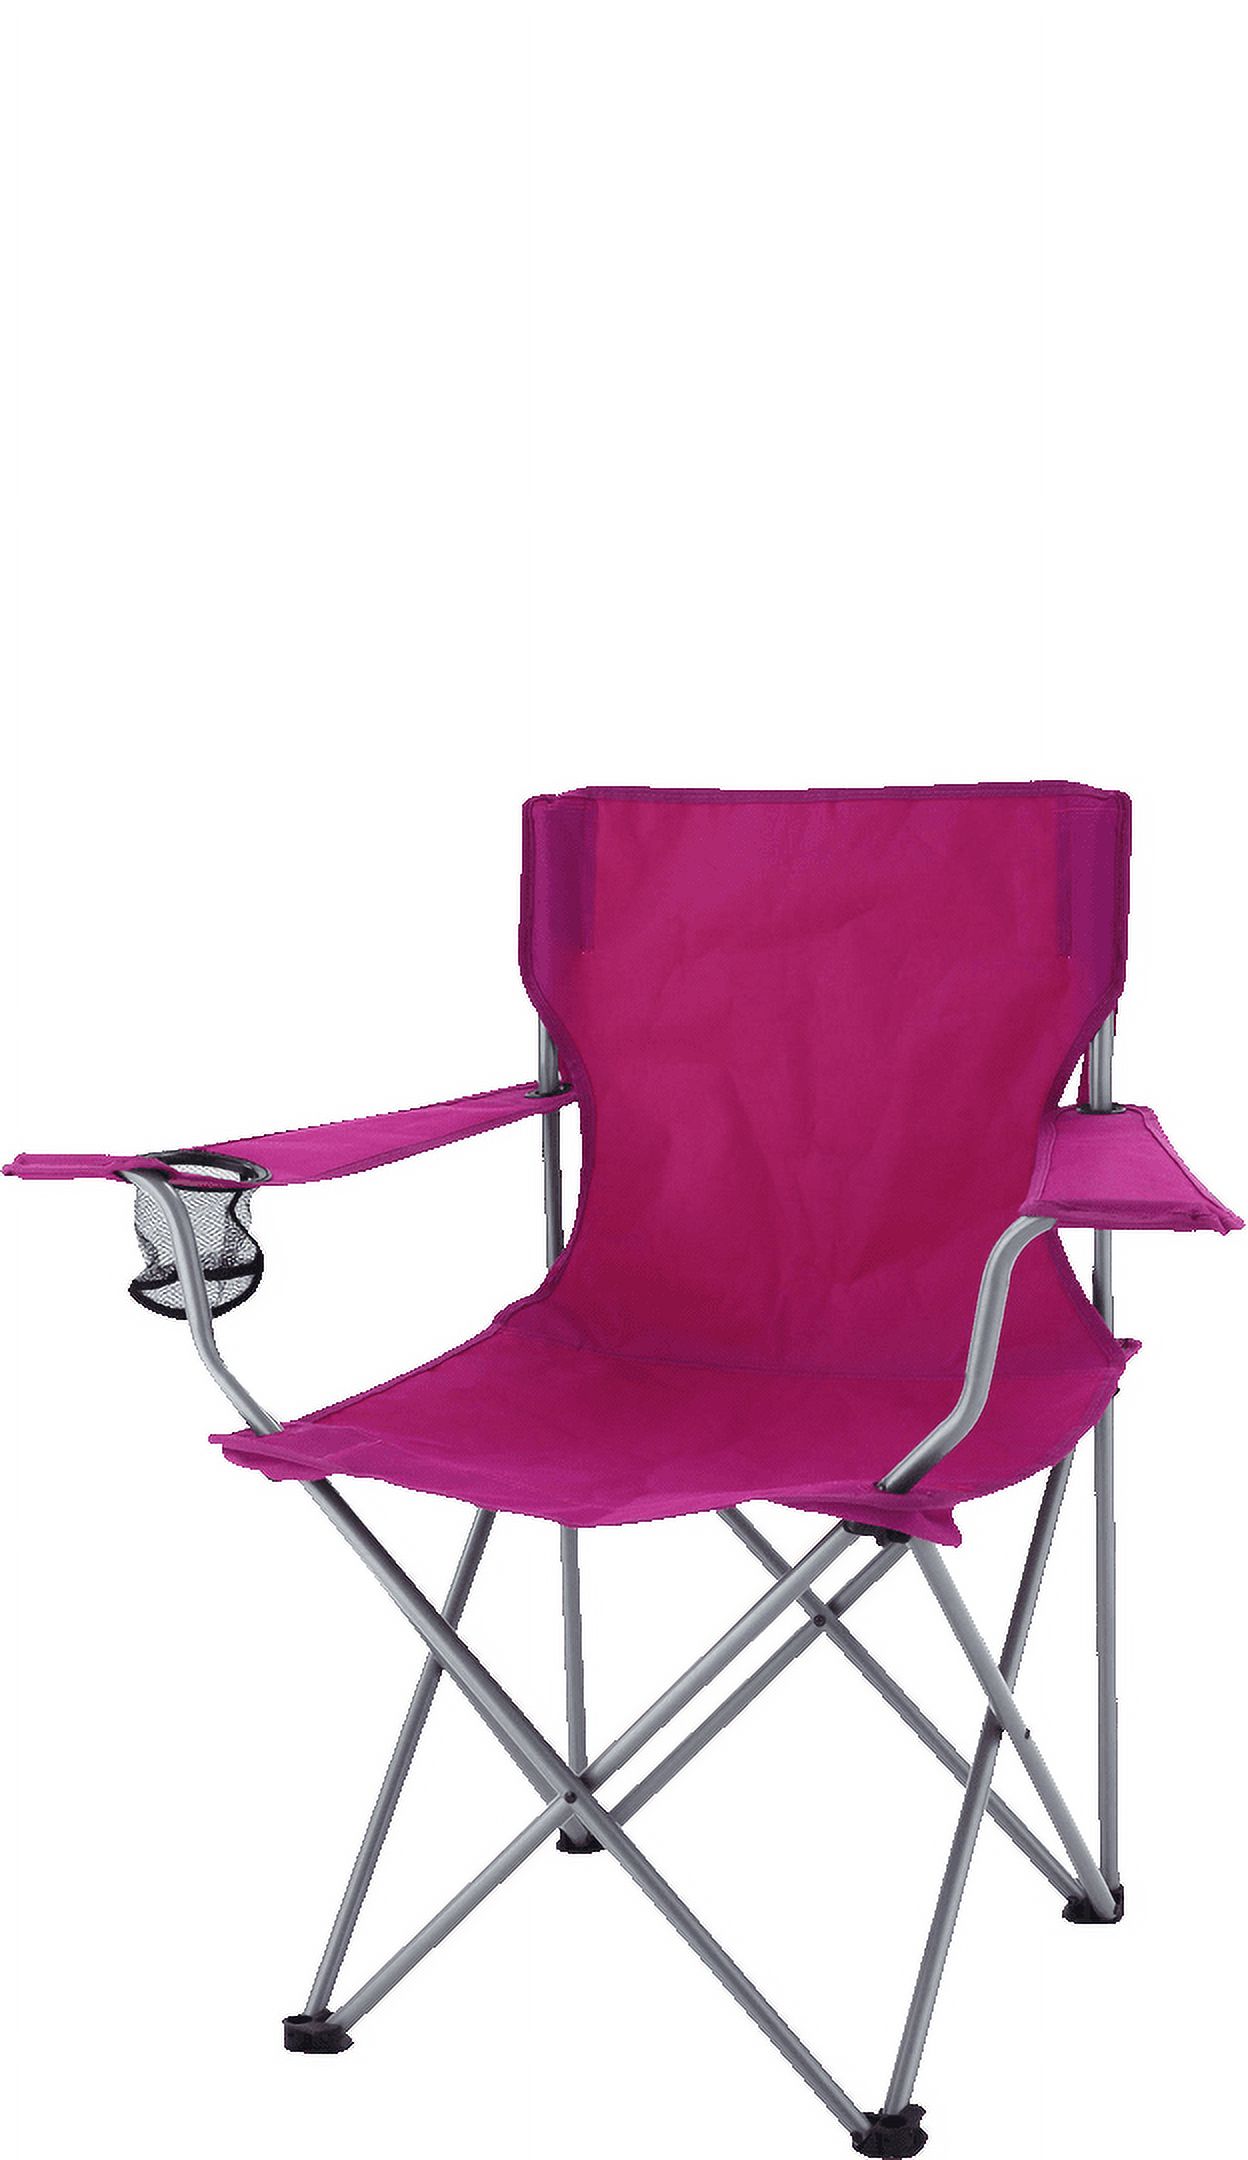 Ozark Trail Folding Chair - image 2 of 2